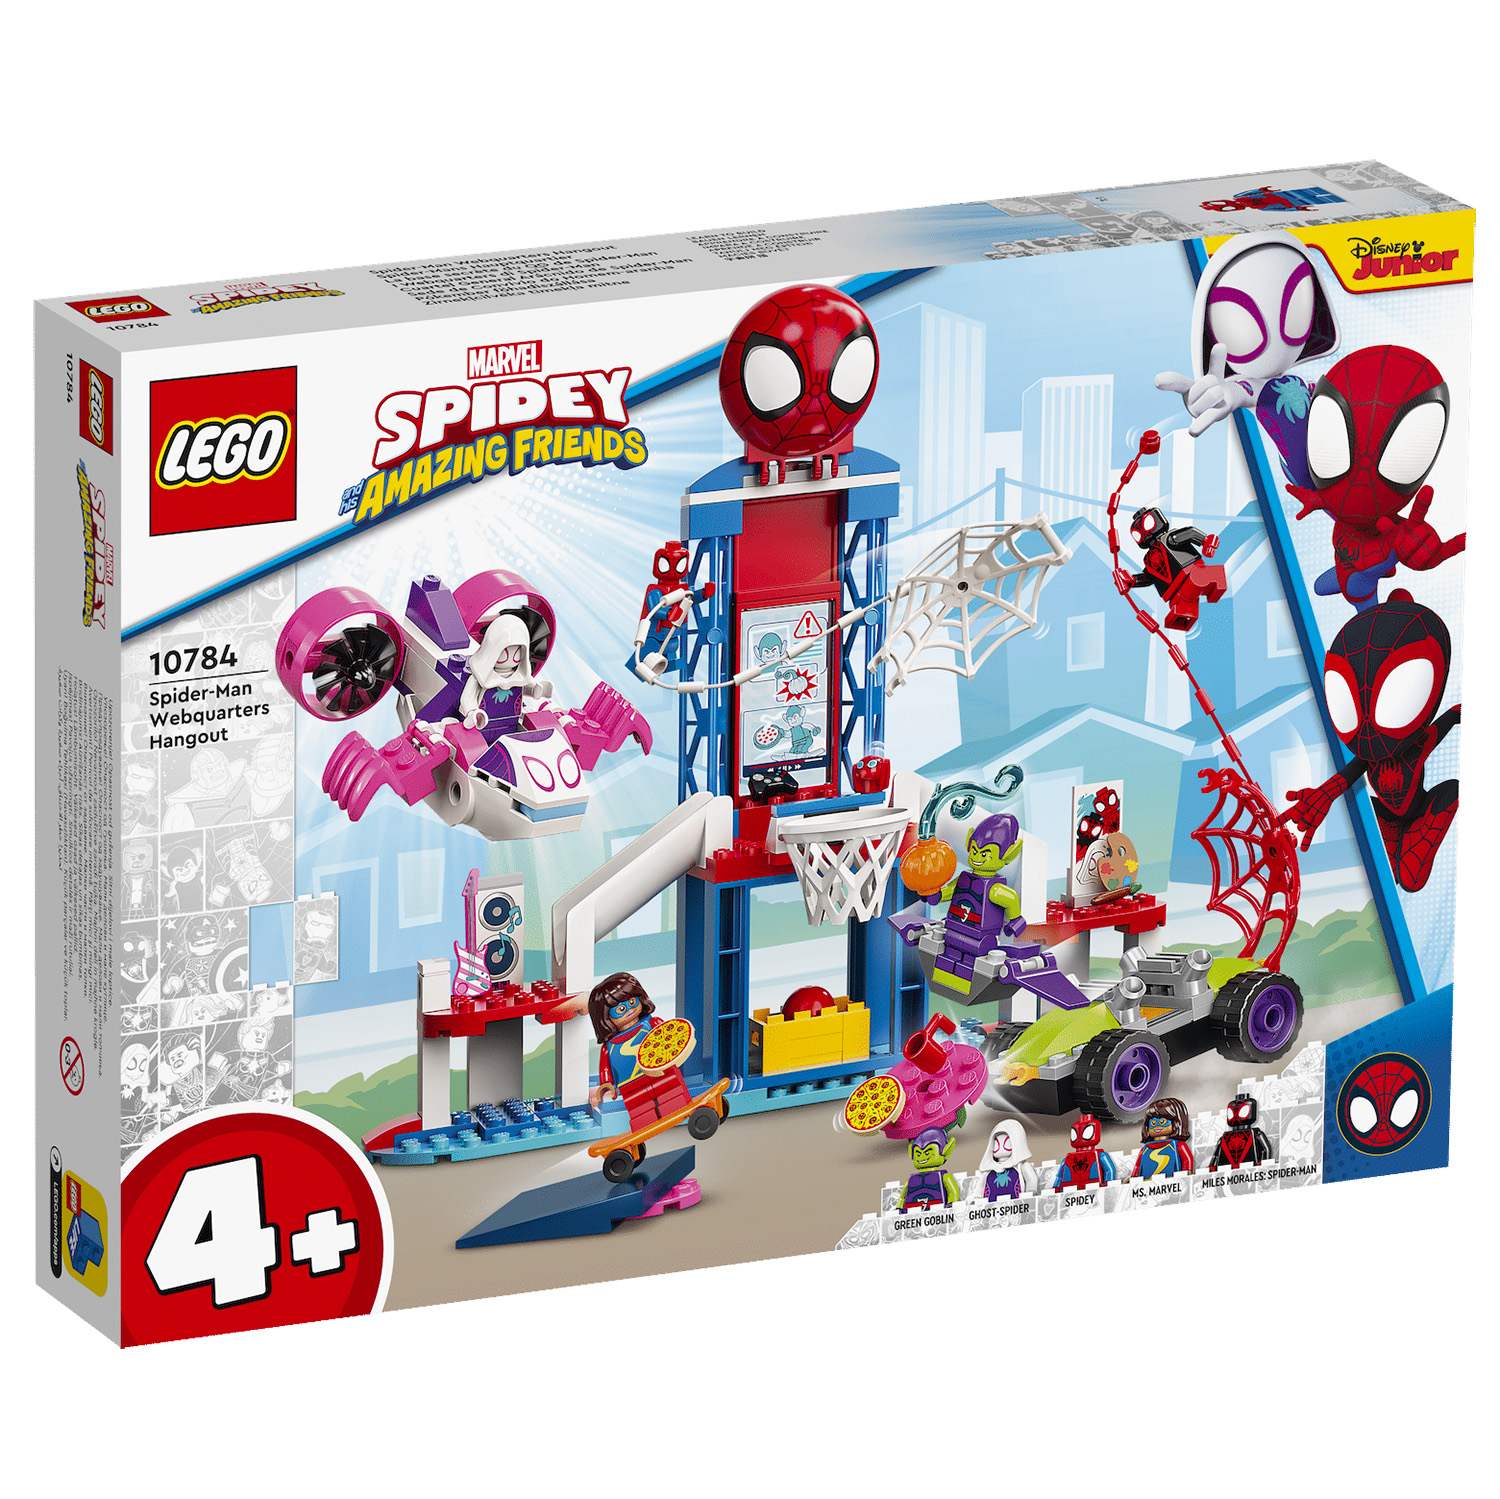 LEGO 10784 Spider-Man’s Webquarters Hangout